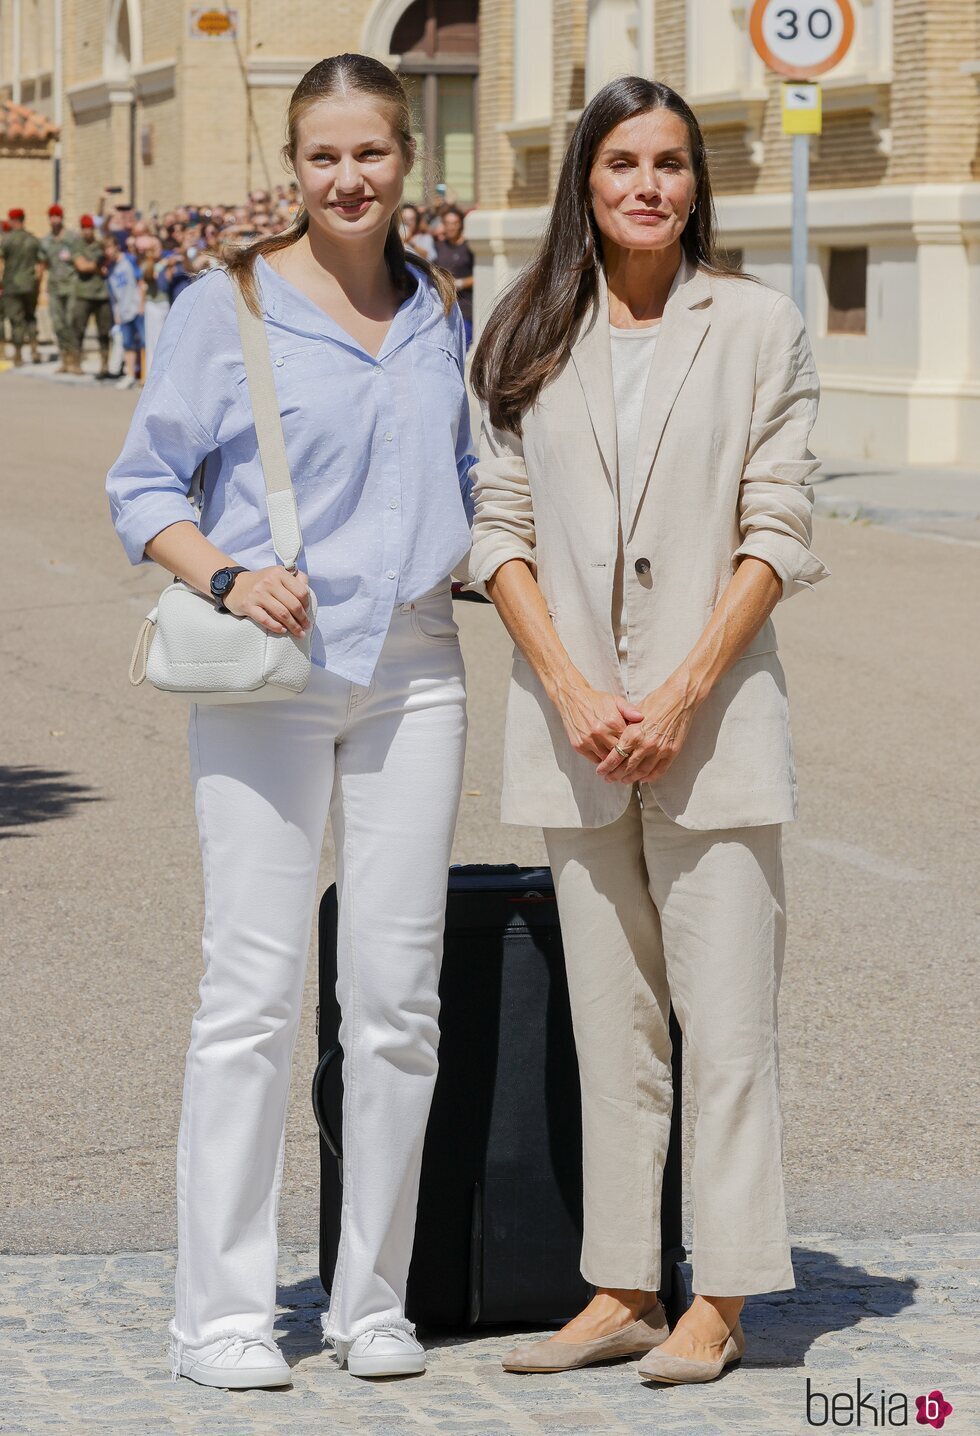 La Princesa Leonor con su maleta junto a la Reina Letizia en su ingreso en la Academia Militar de Zaragoza